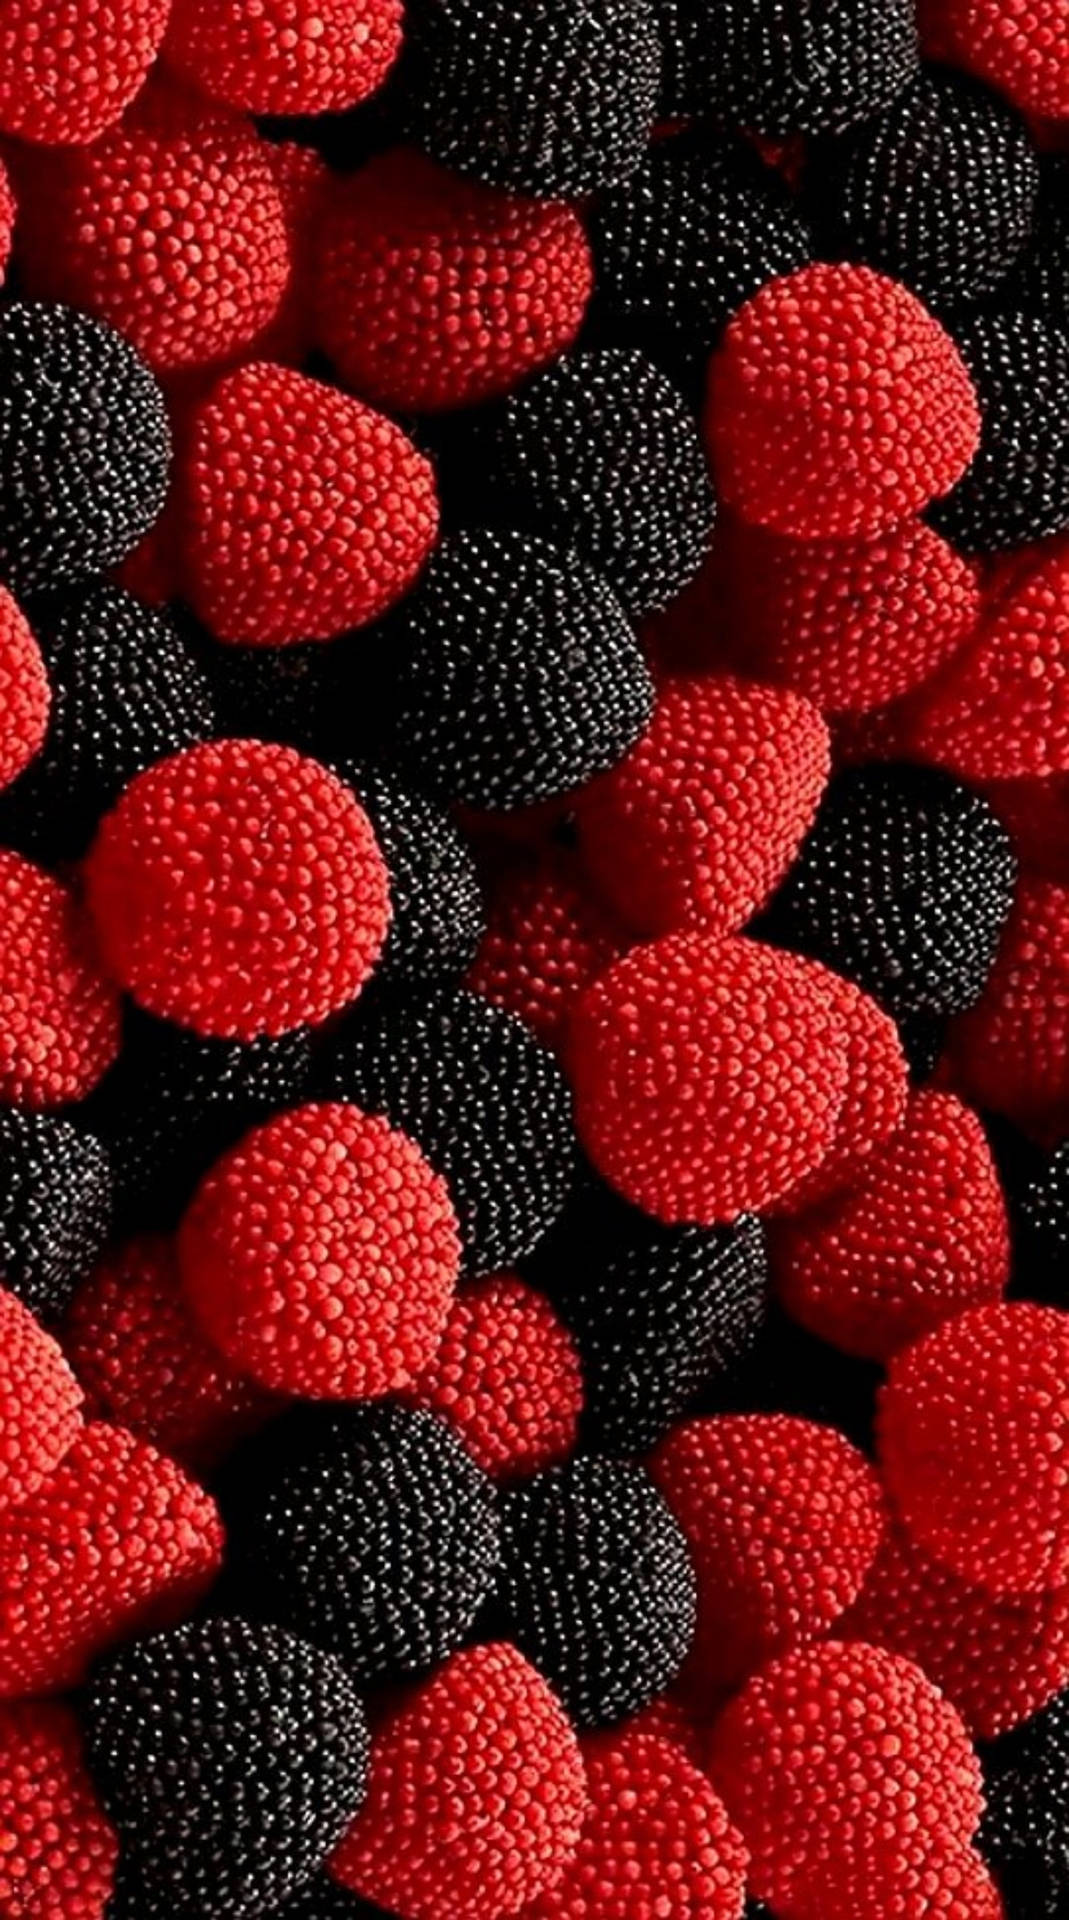 Raspberry Fruits 8k Phone Wallpaper